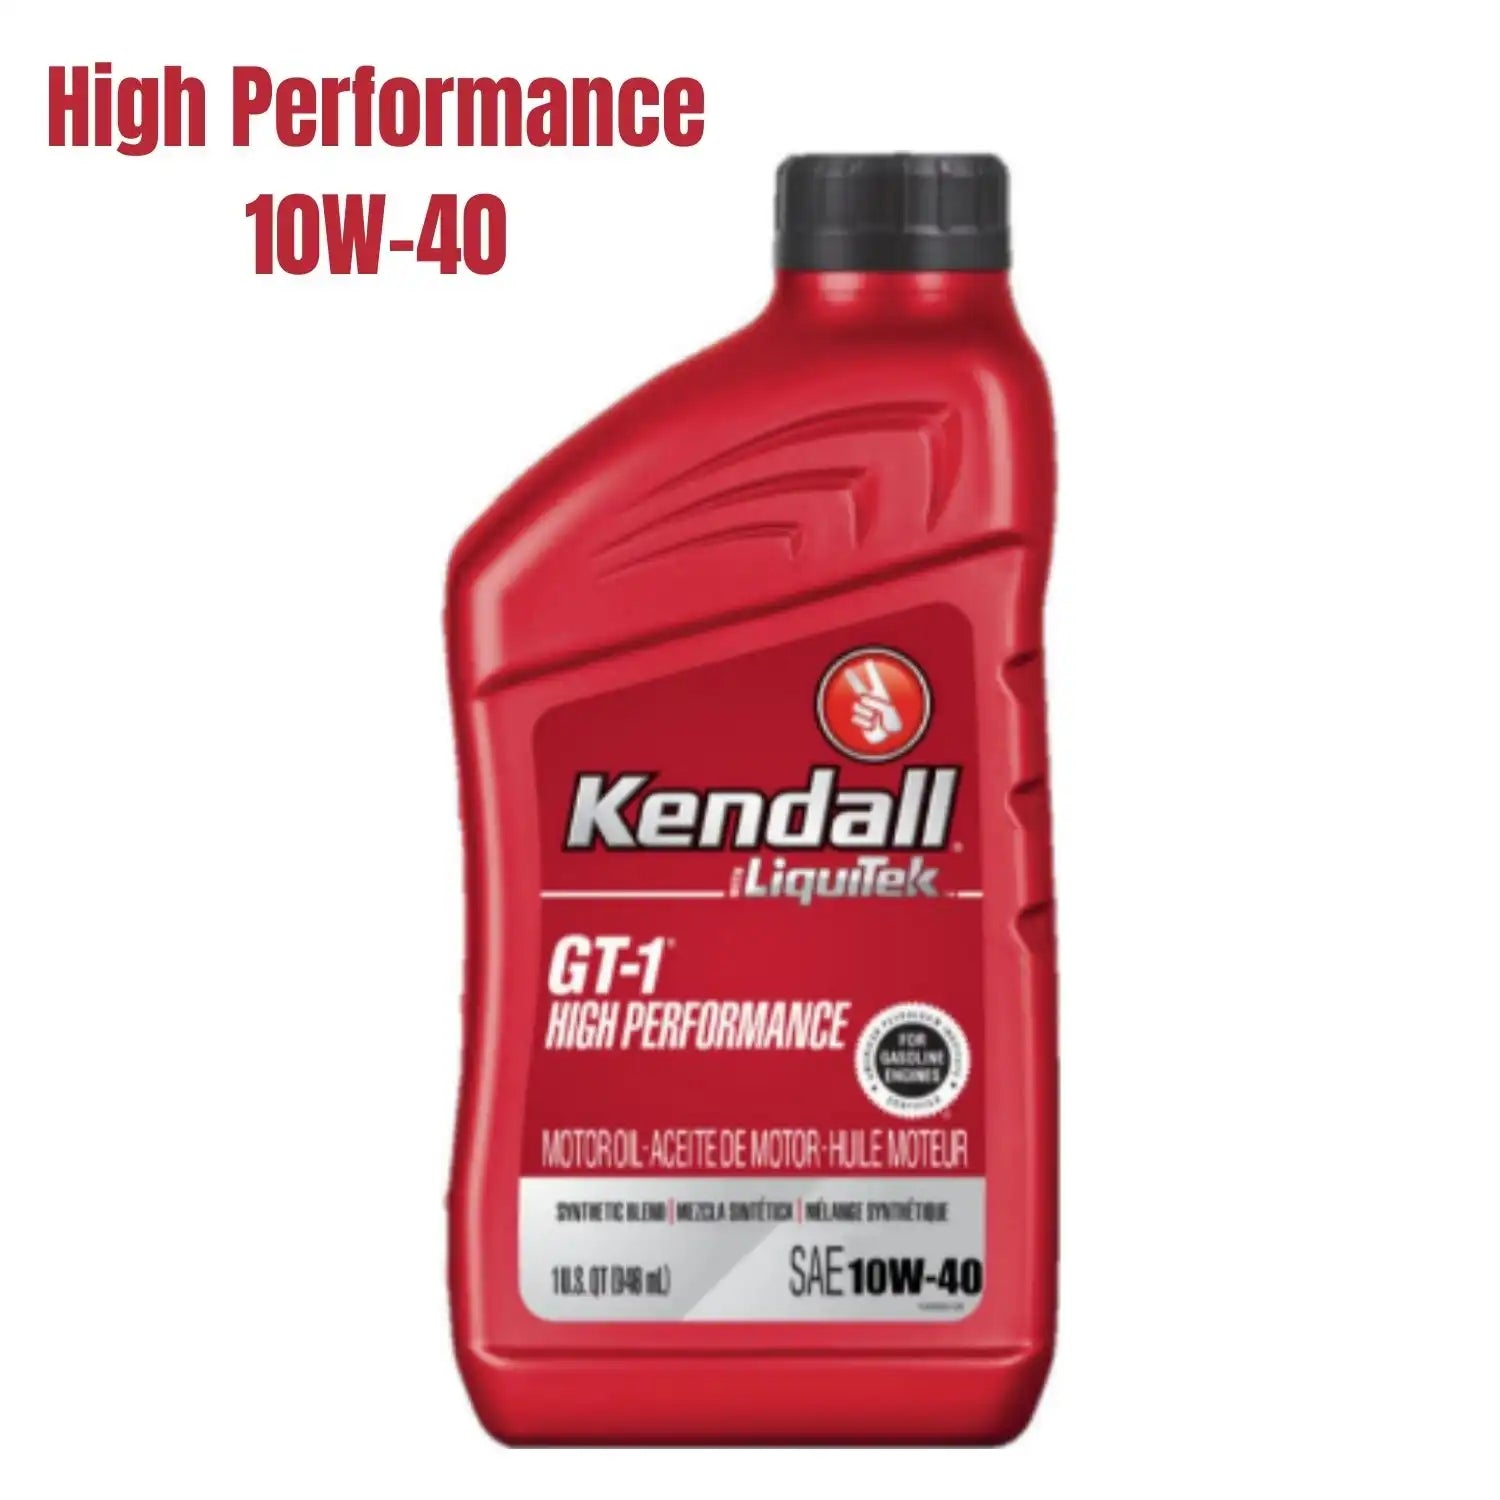 Kendall Gt-1 10W-40 High Performance Car Engine Oil (1 Liter)